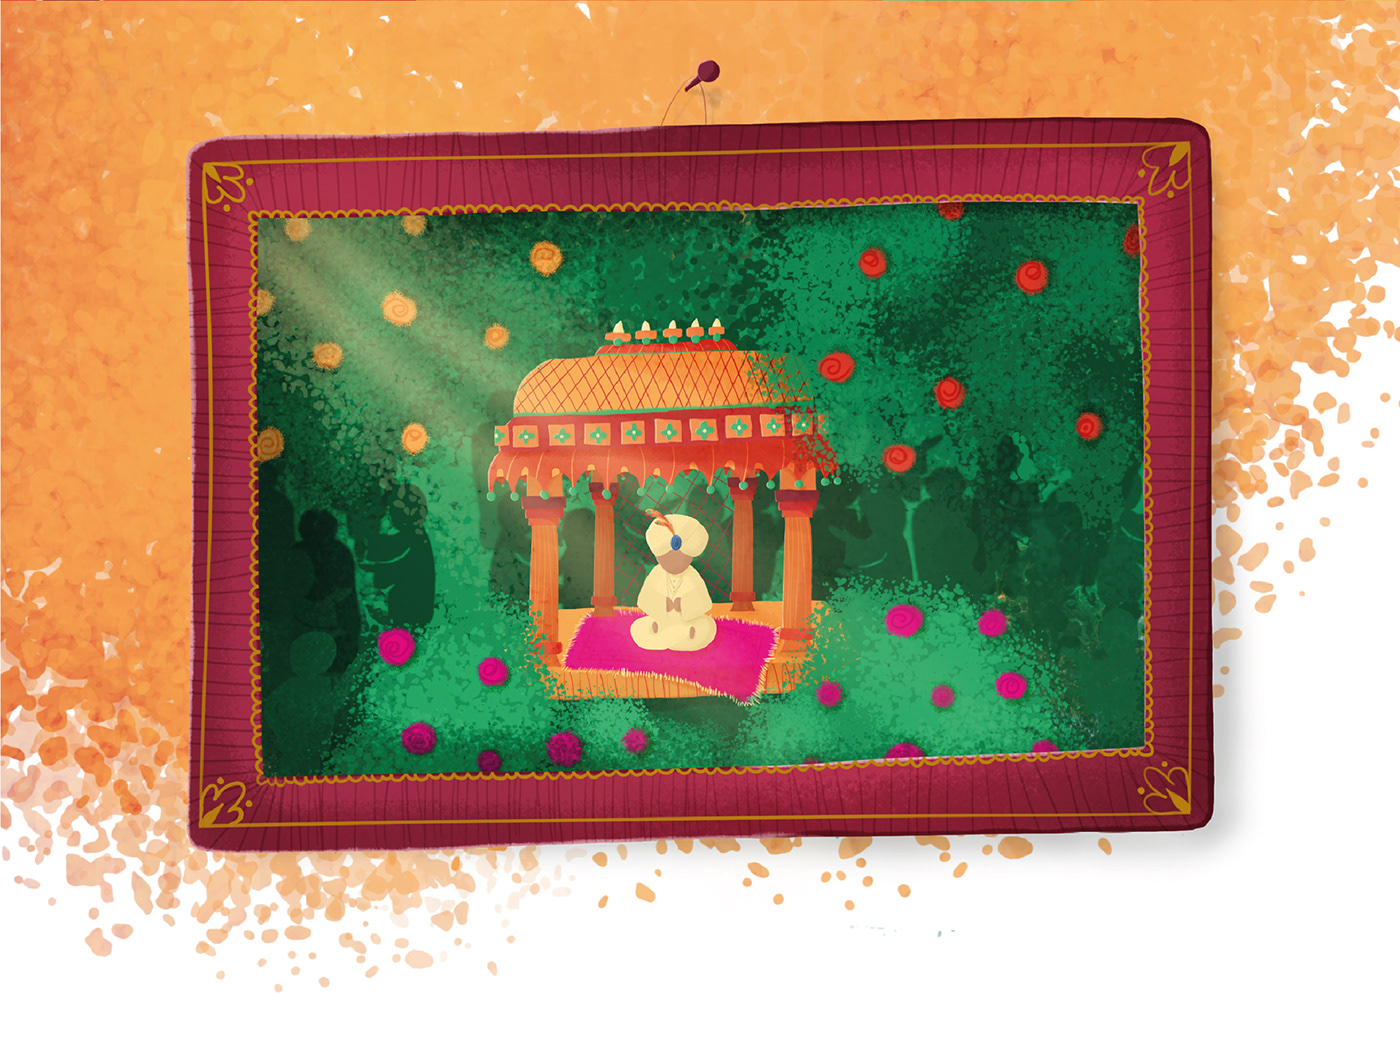 piórko2018 ILLUSTRATION  contest India bird children's book boy enchanted Paintings orange